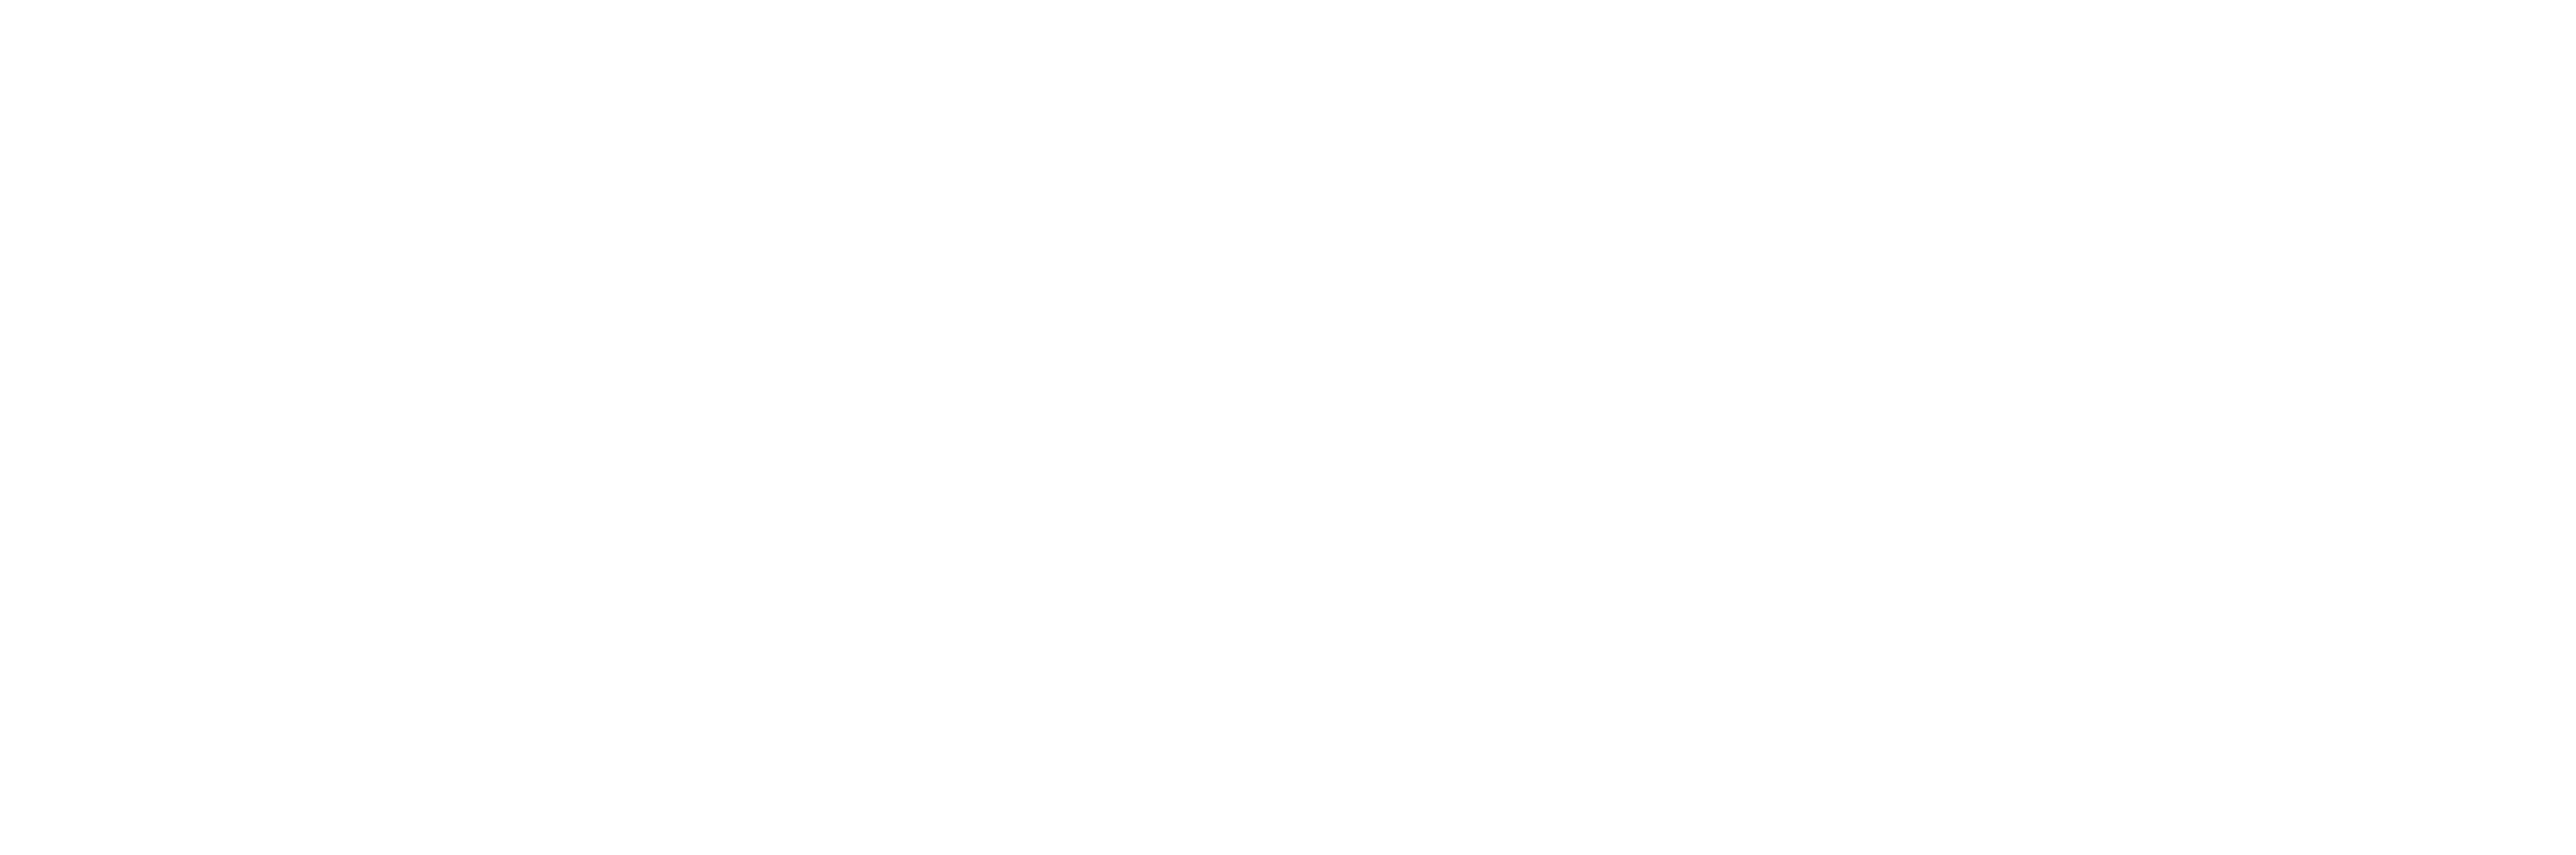 Machiavellian God